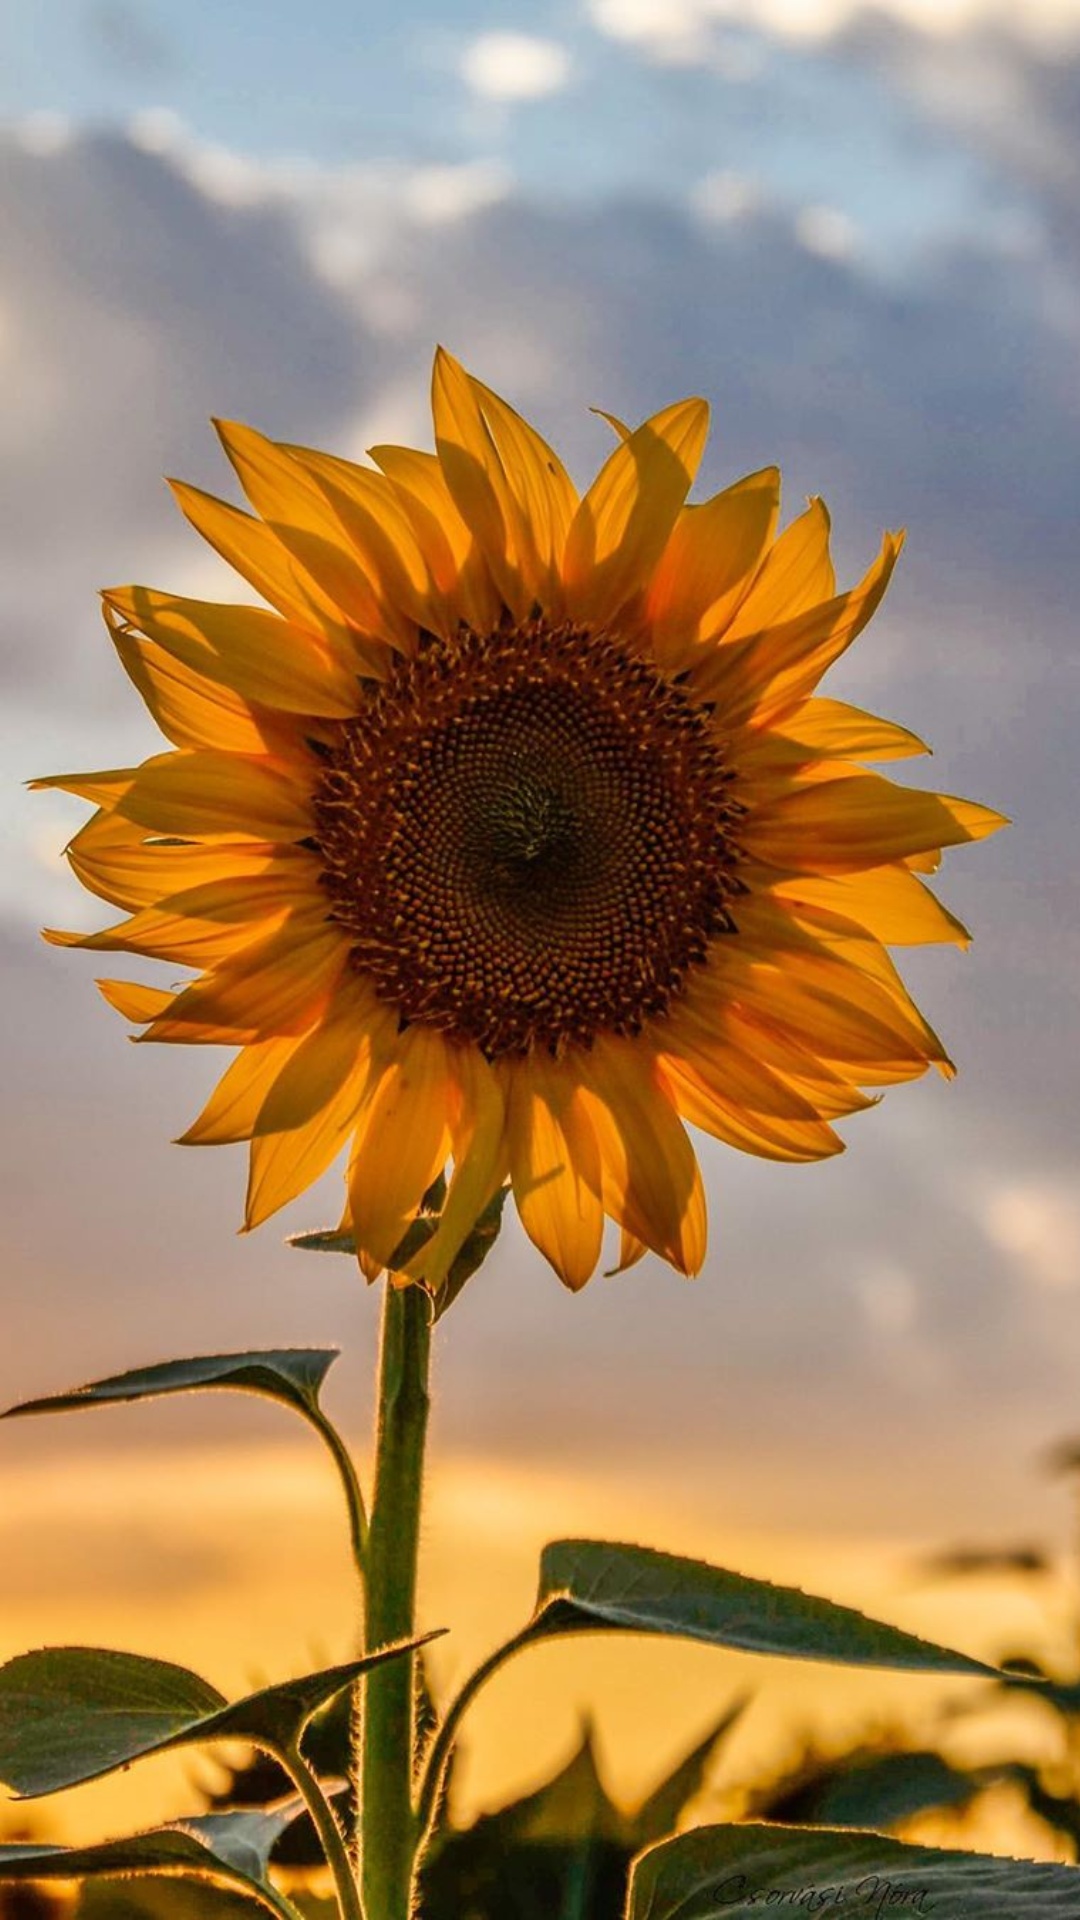 Sunflower Wallpapers - Top 30 Best Sunflower Wallpapers Download